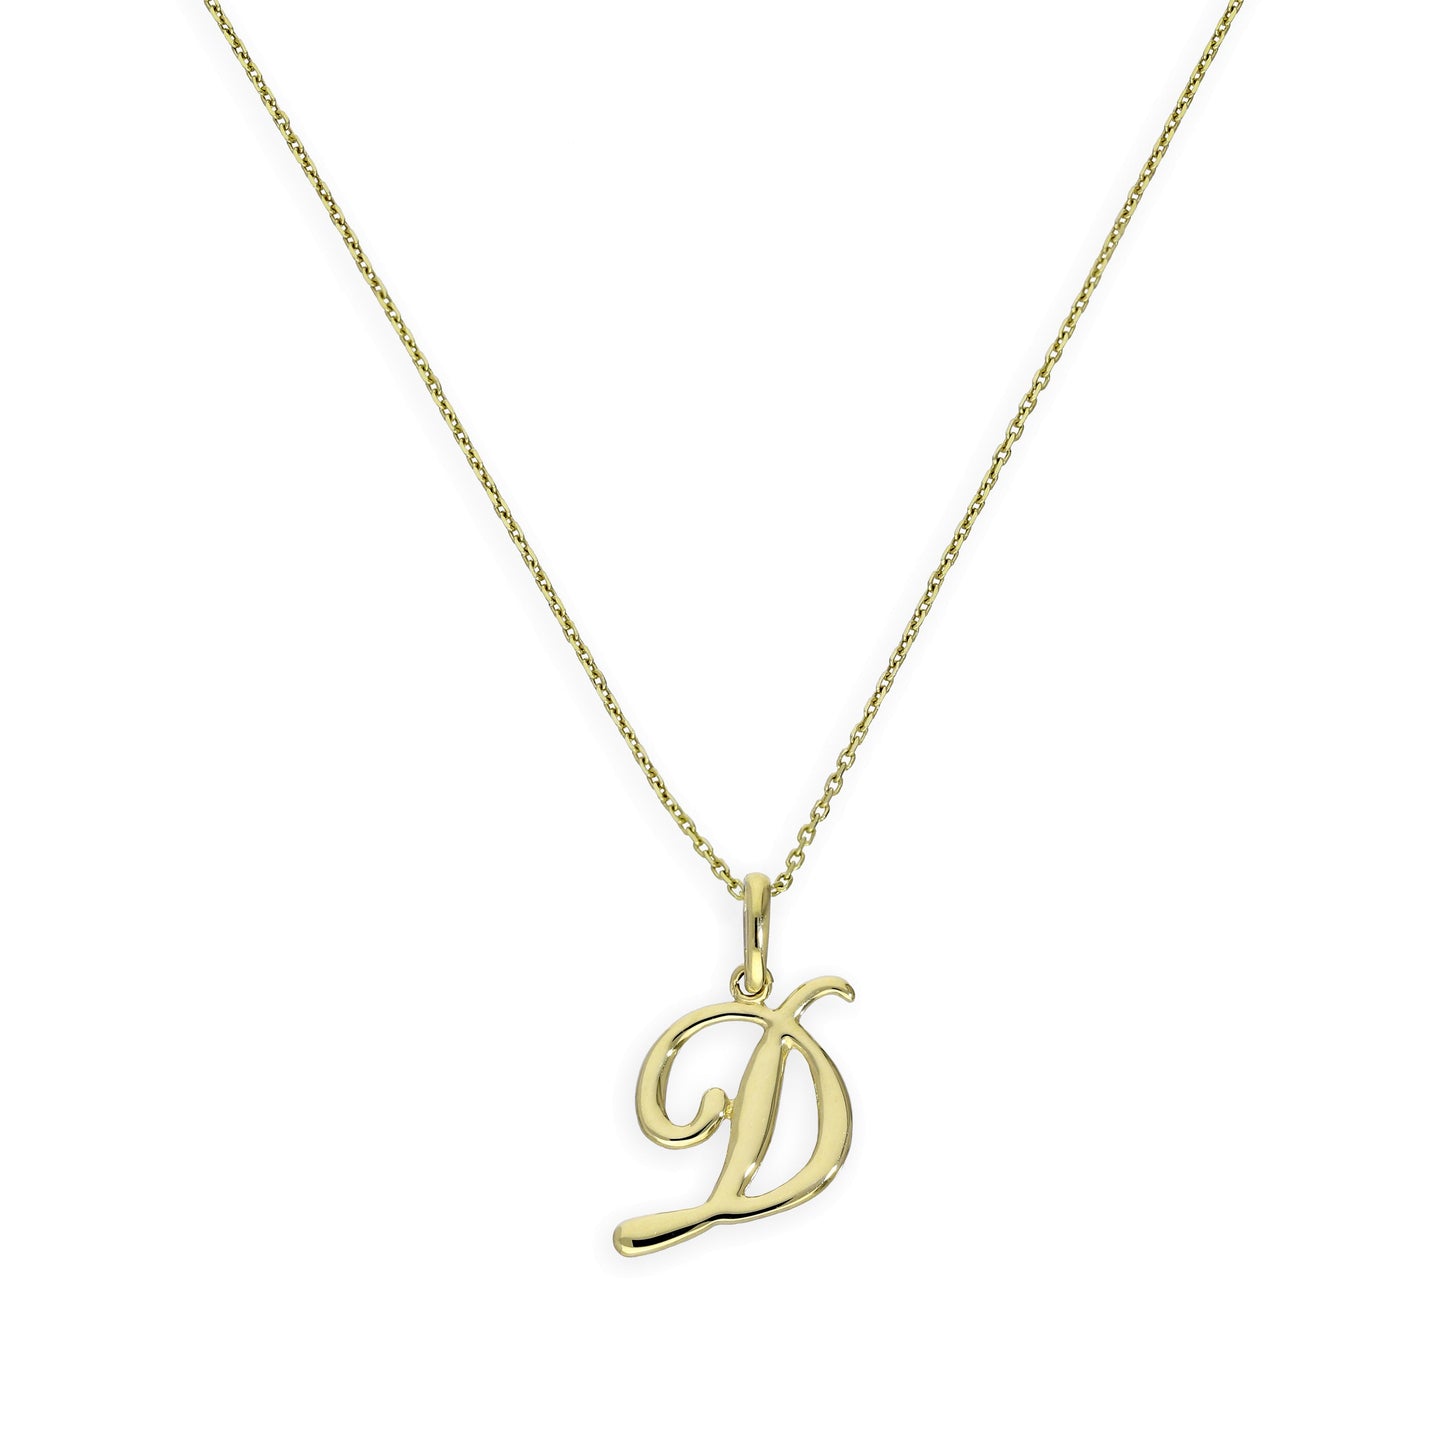 9ct Gold Fancy Calligraphy Script Letter D Pendant Necklace 16 - 20 Inches